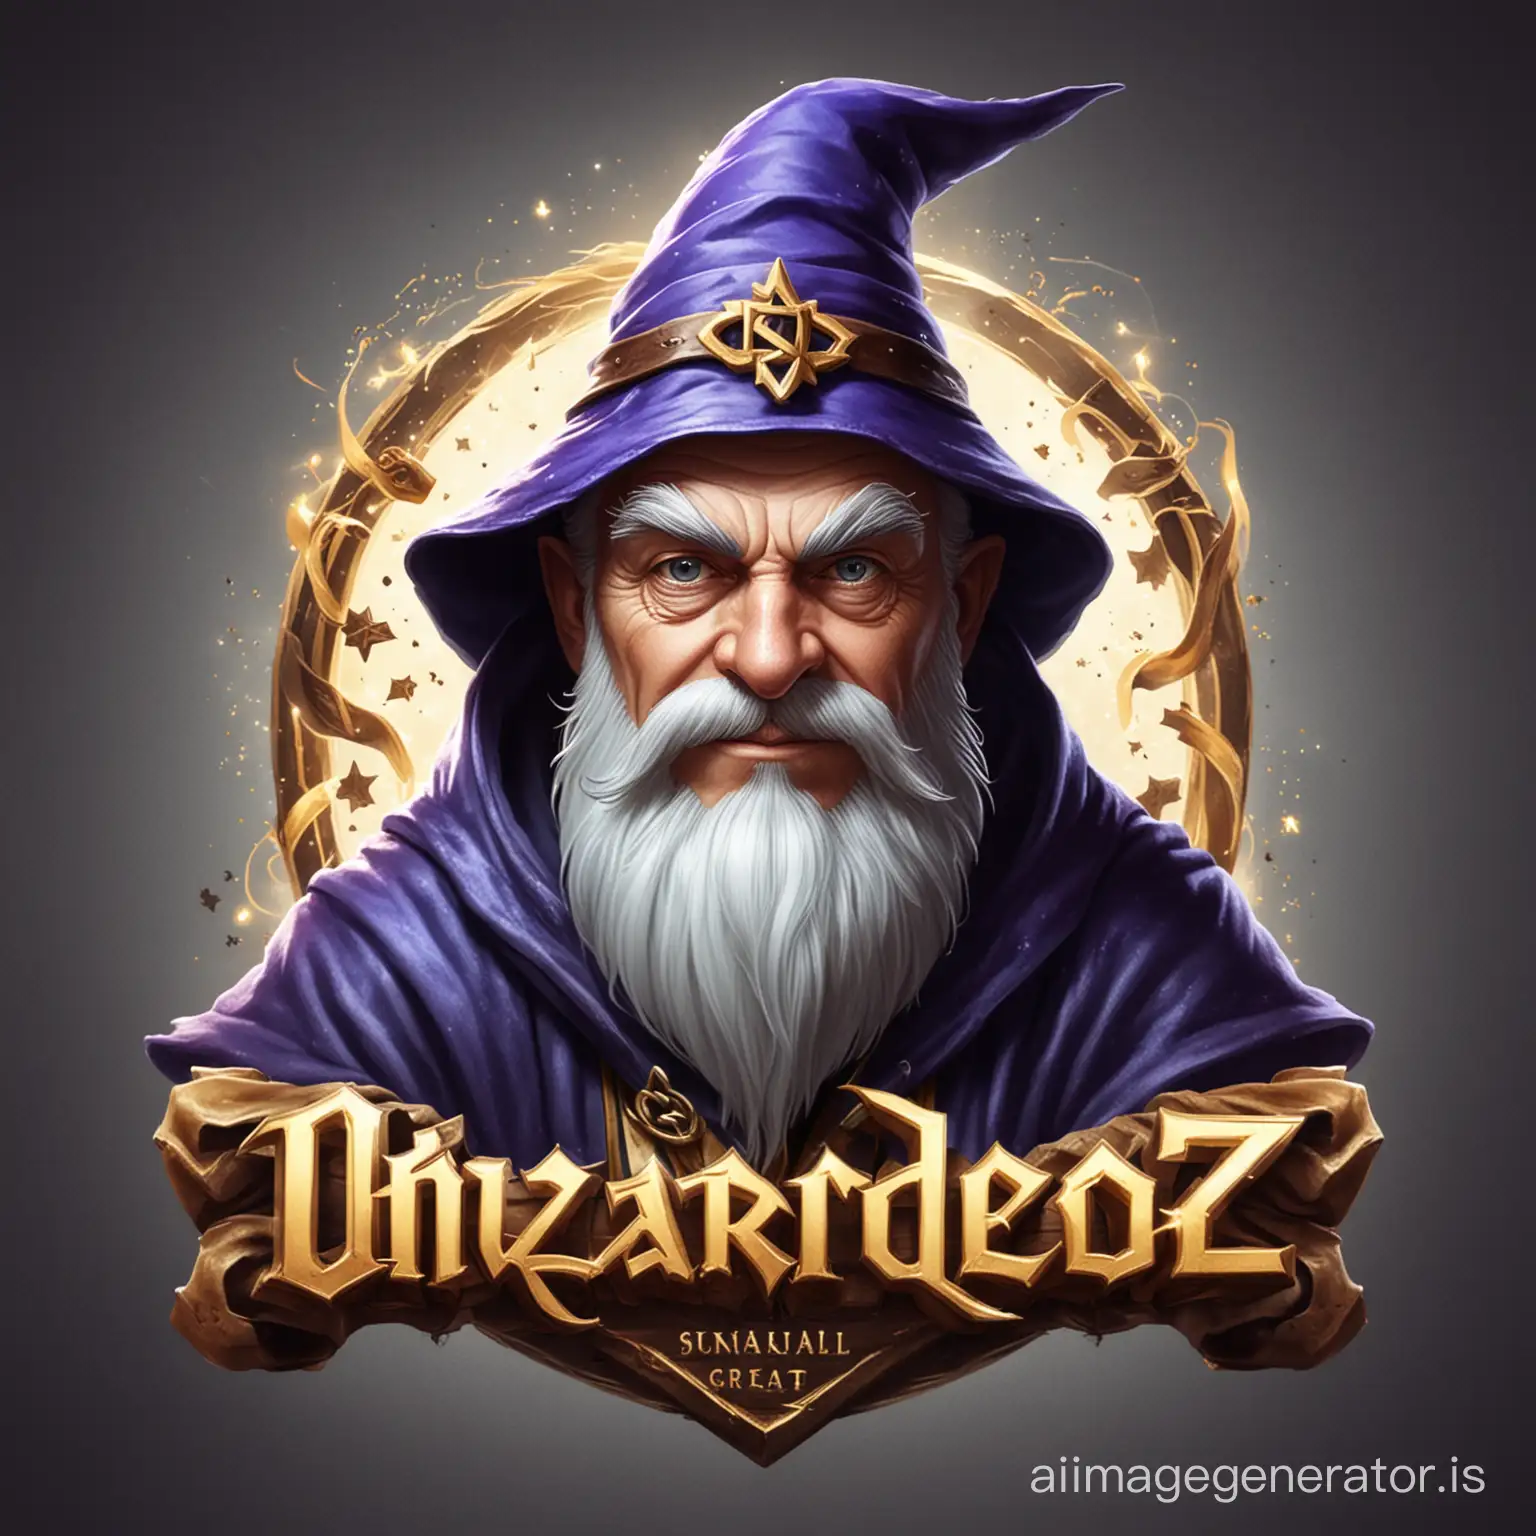 Magical-Wizard-Logo-for-WizardOZTheGreat-YouTube-Channel